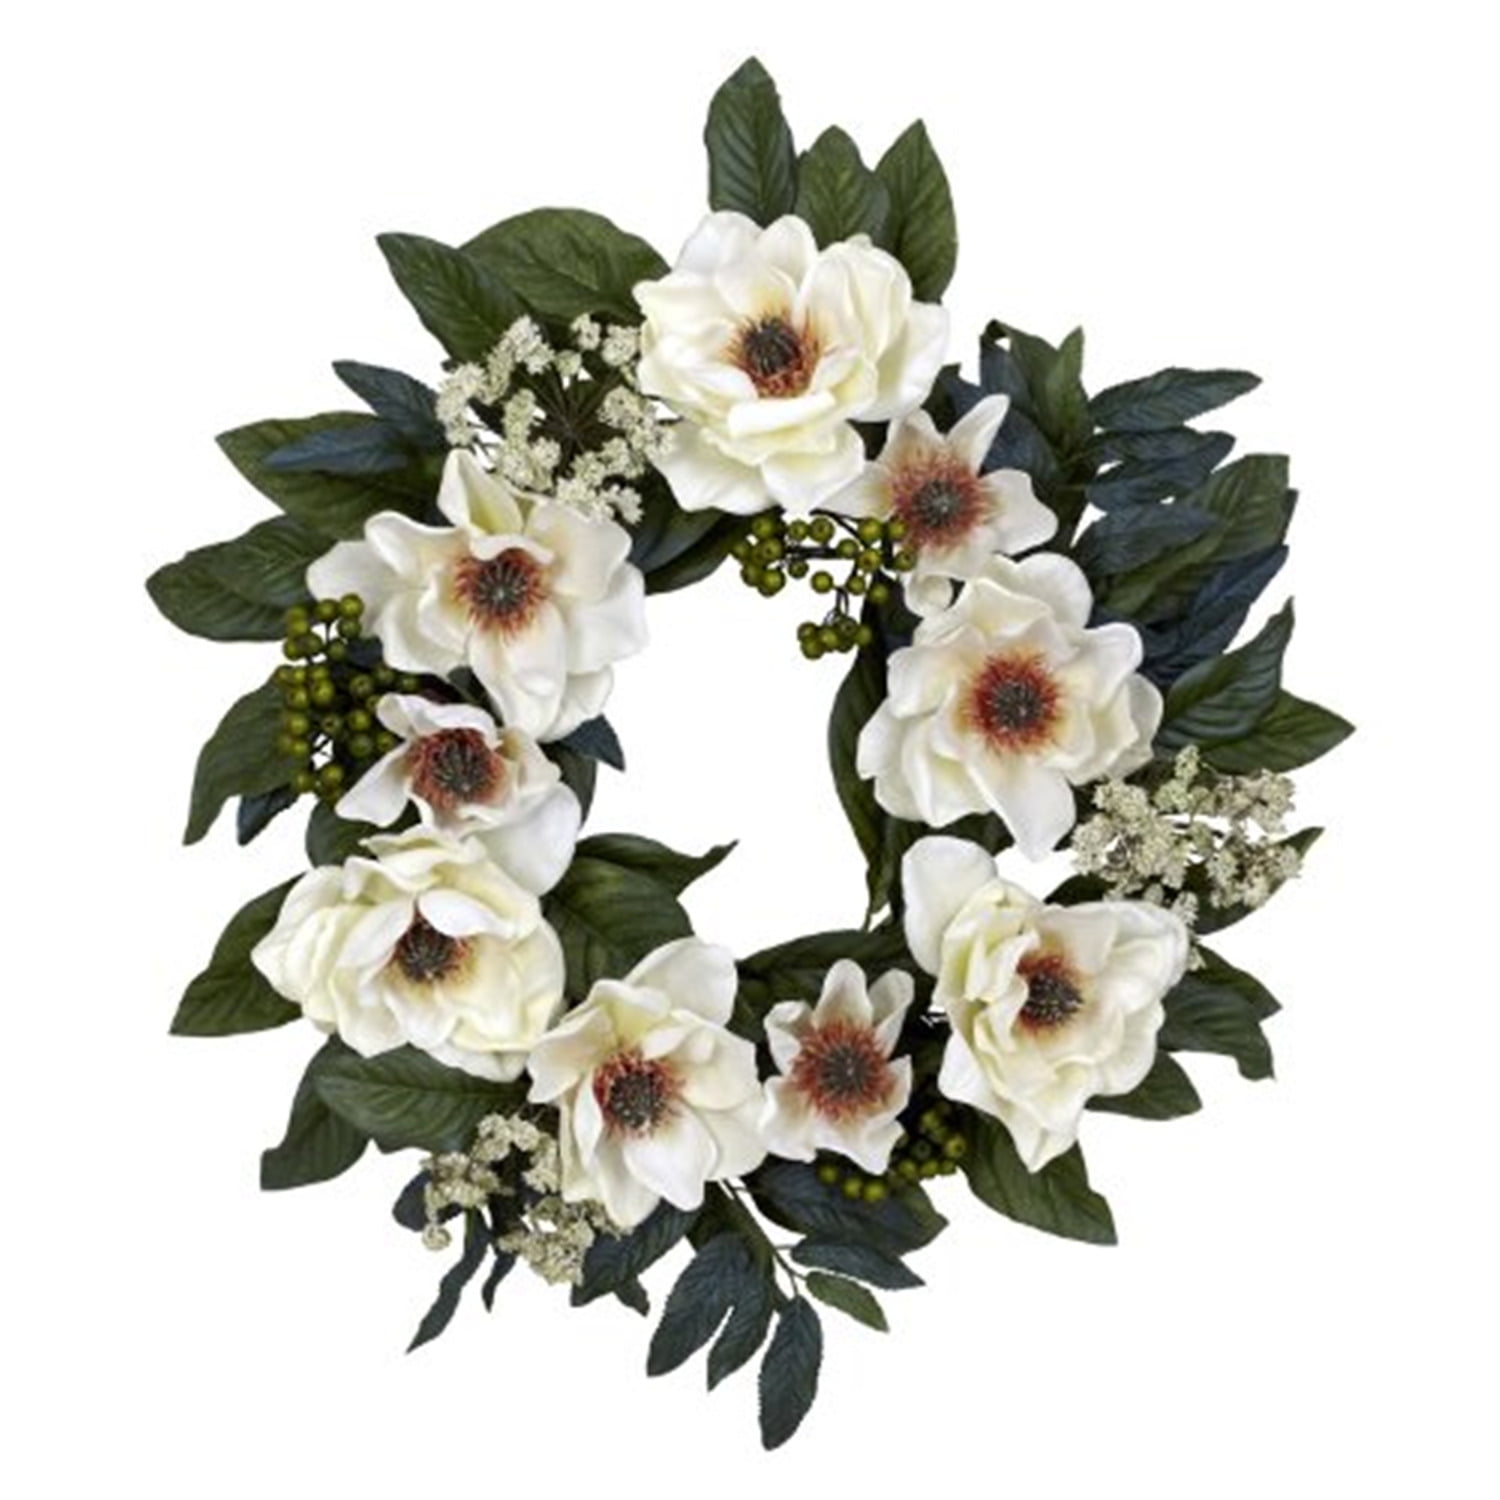 Magnolia Wreath,Hydrangea Wreath,Door Decor,Everyday Wreath,All Year Wreath,Wreath for Door,Fall Wreath,Floral Wreath,Artificial Wreath